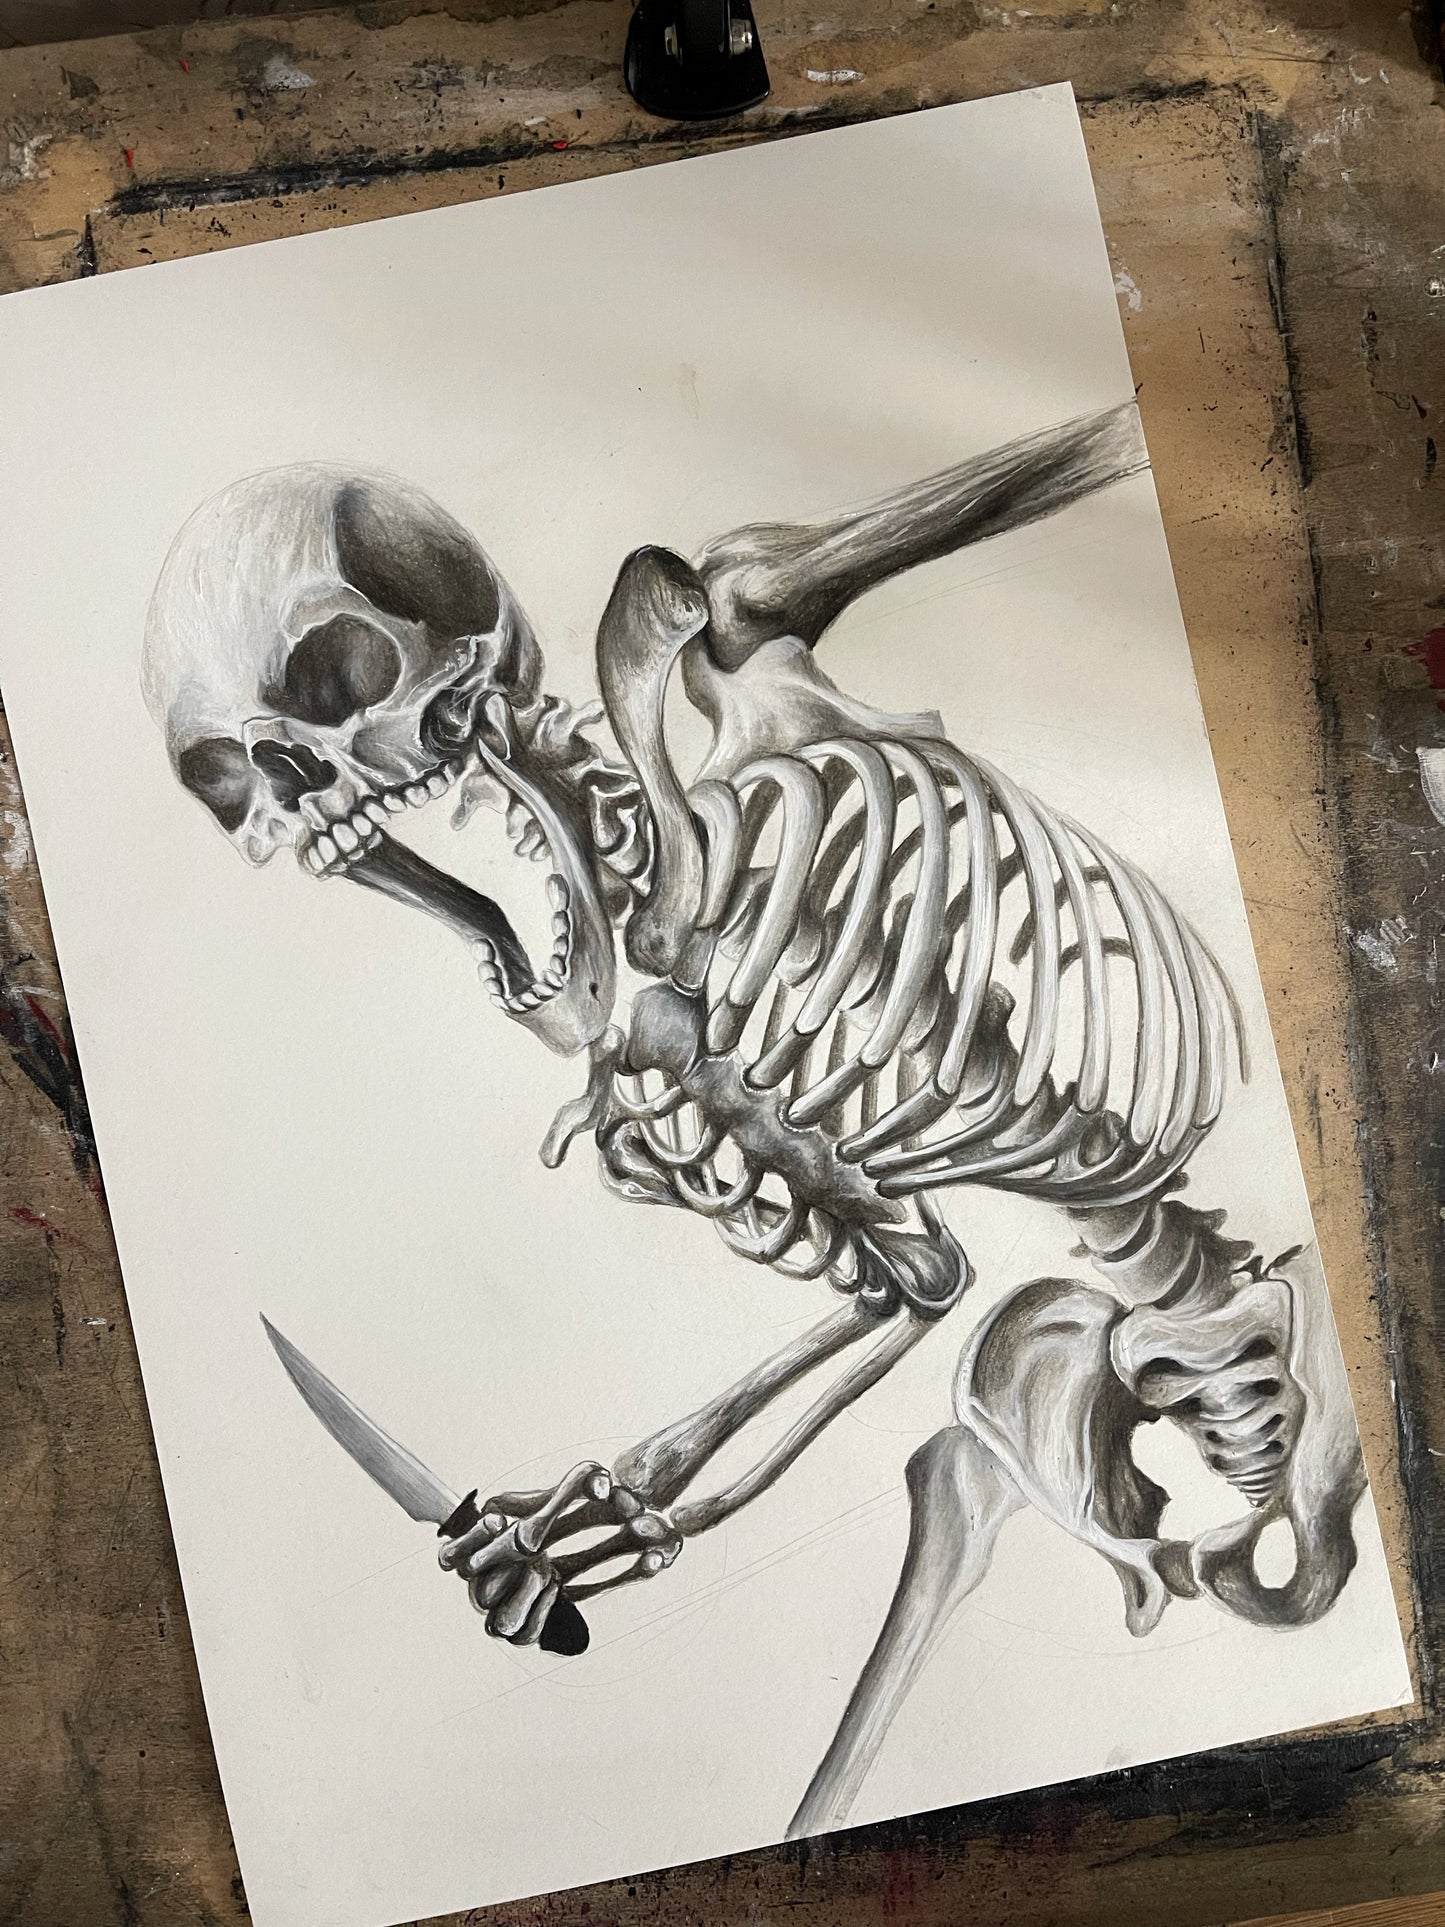 WE ALL GO A LITTLE MAD SOMETIMES | Skeleton